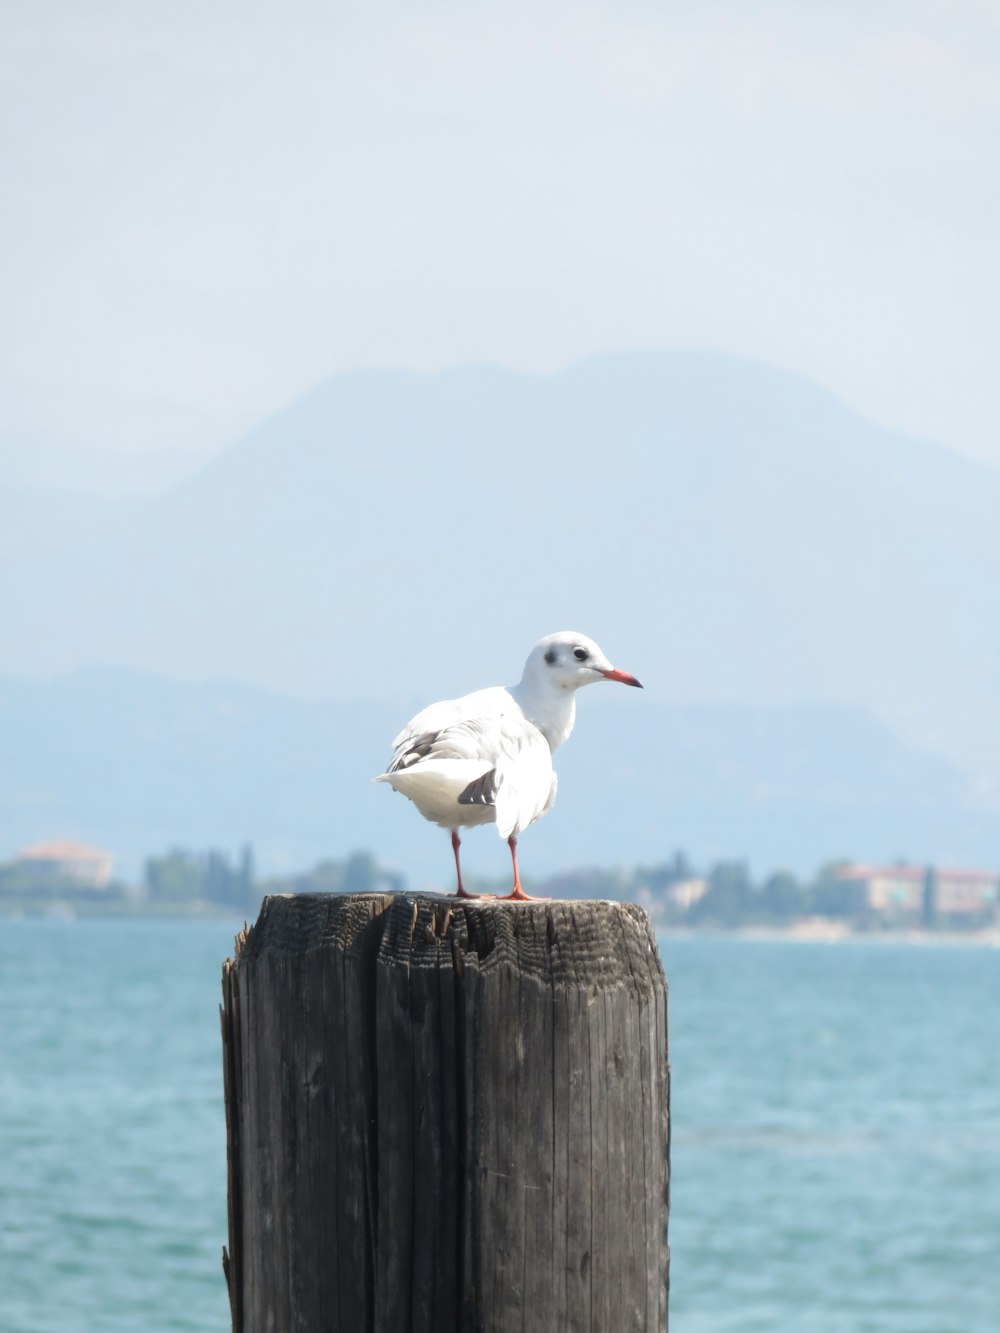 a bird on a wood post